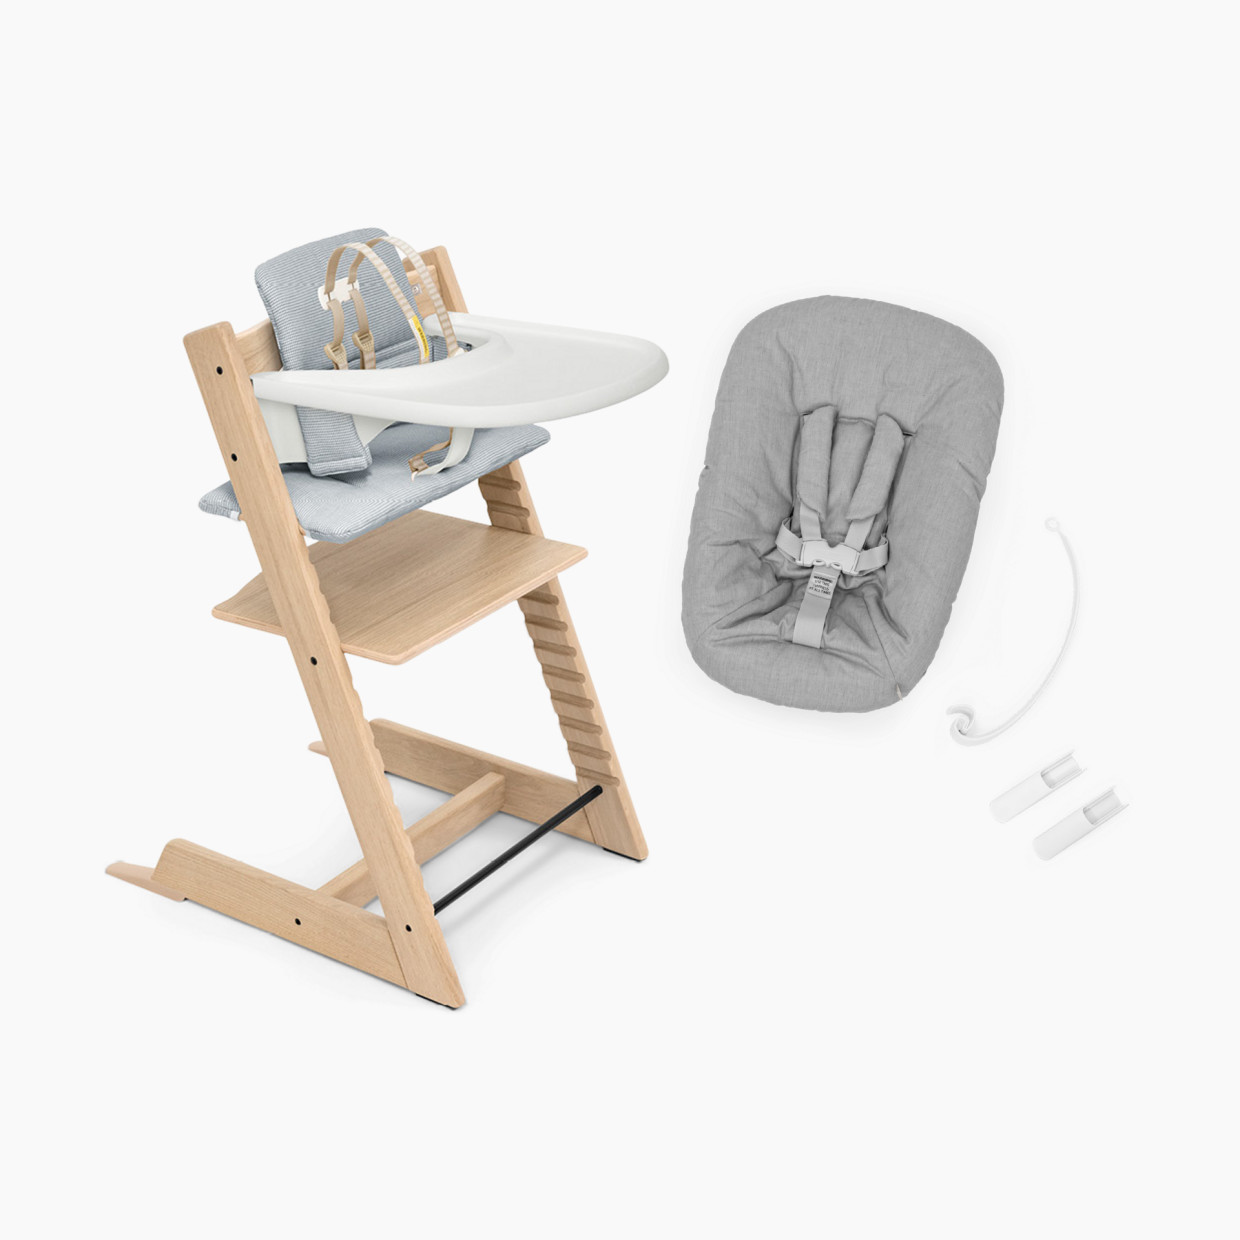 Stokke Tripp Trapp High Chair Complete + Newborn Set - Oak Natural/Nordic Blue Cushion/White Tray.